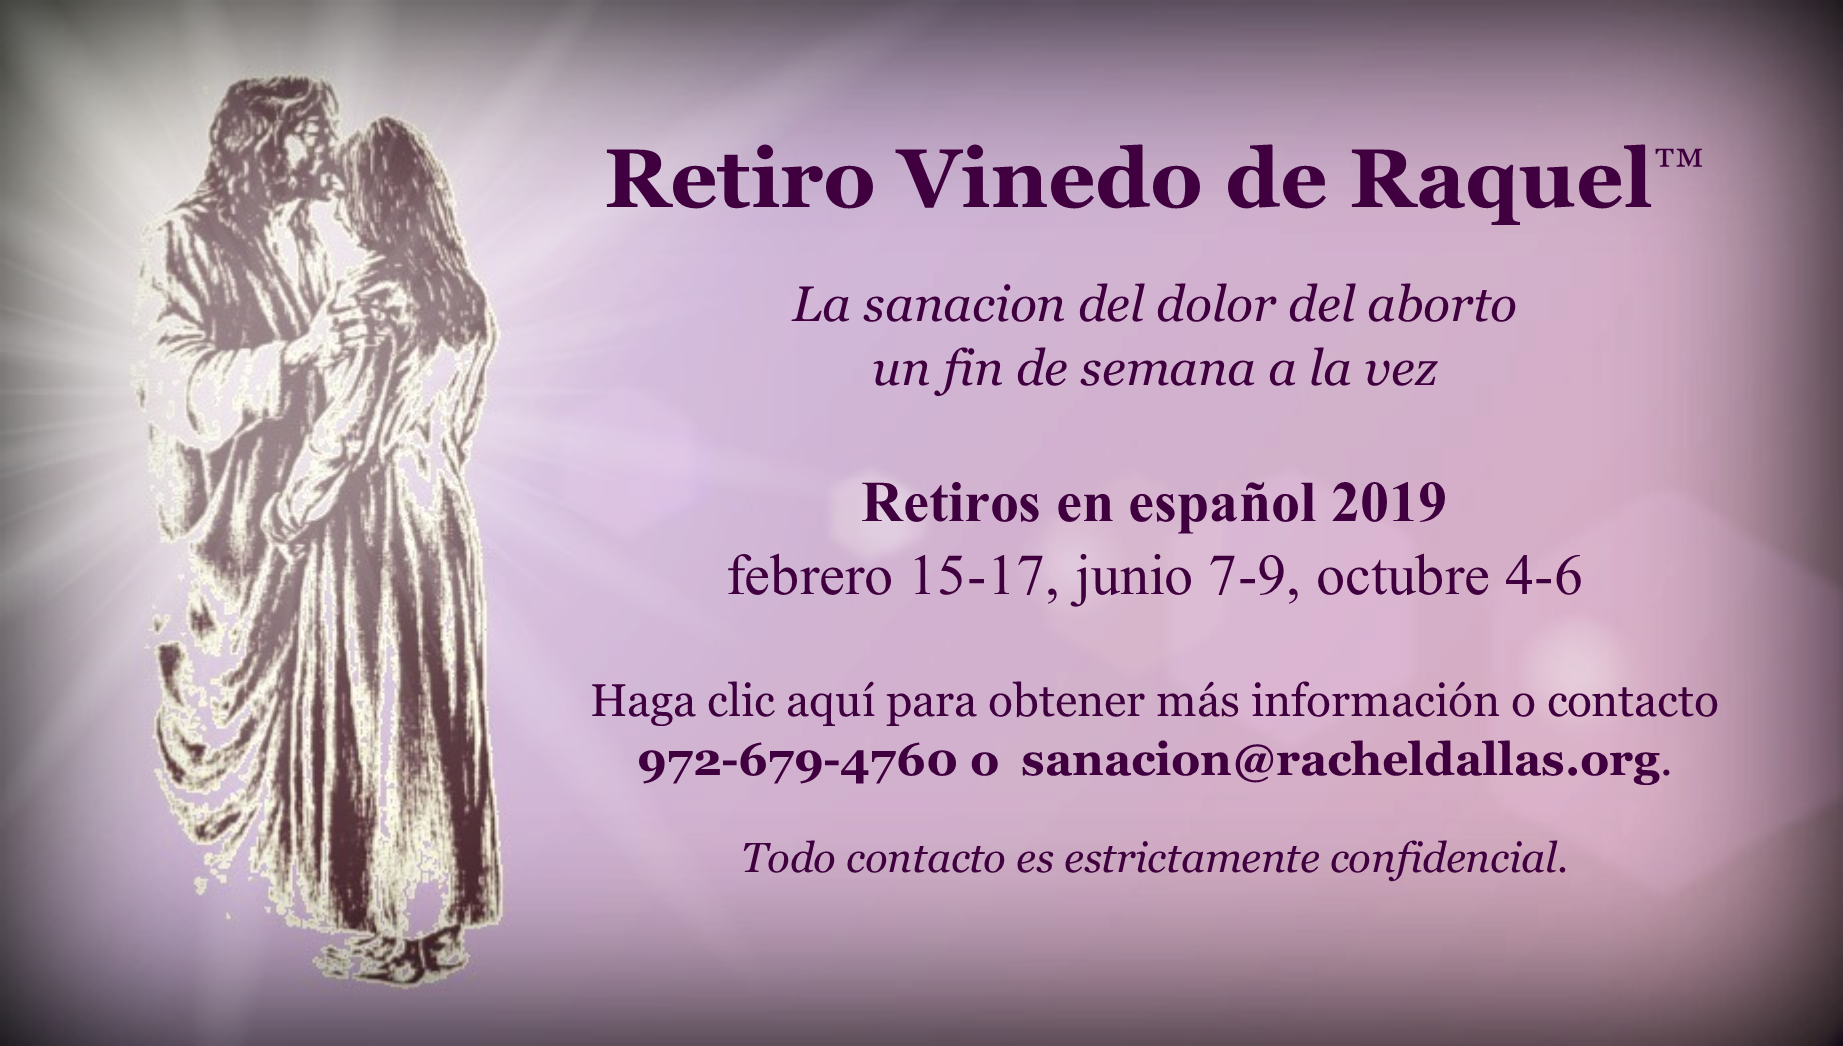 RVR_2019_Homepage_Ad_Spanish.png